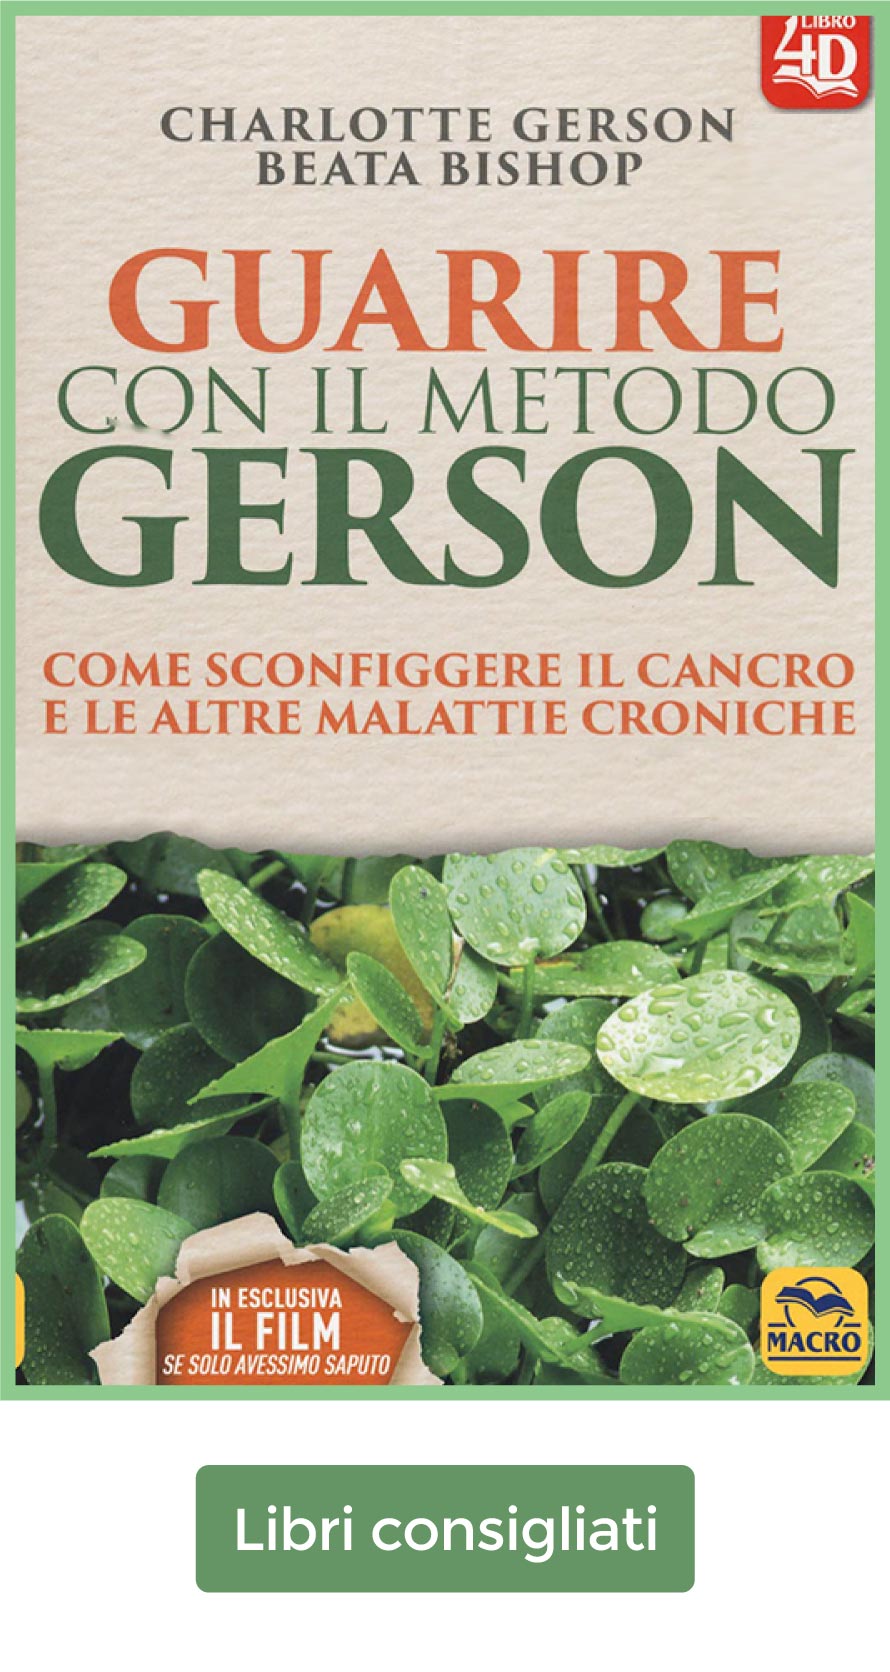 Metodo Gerson, un libro da leggere per approfondire